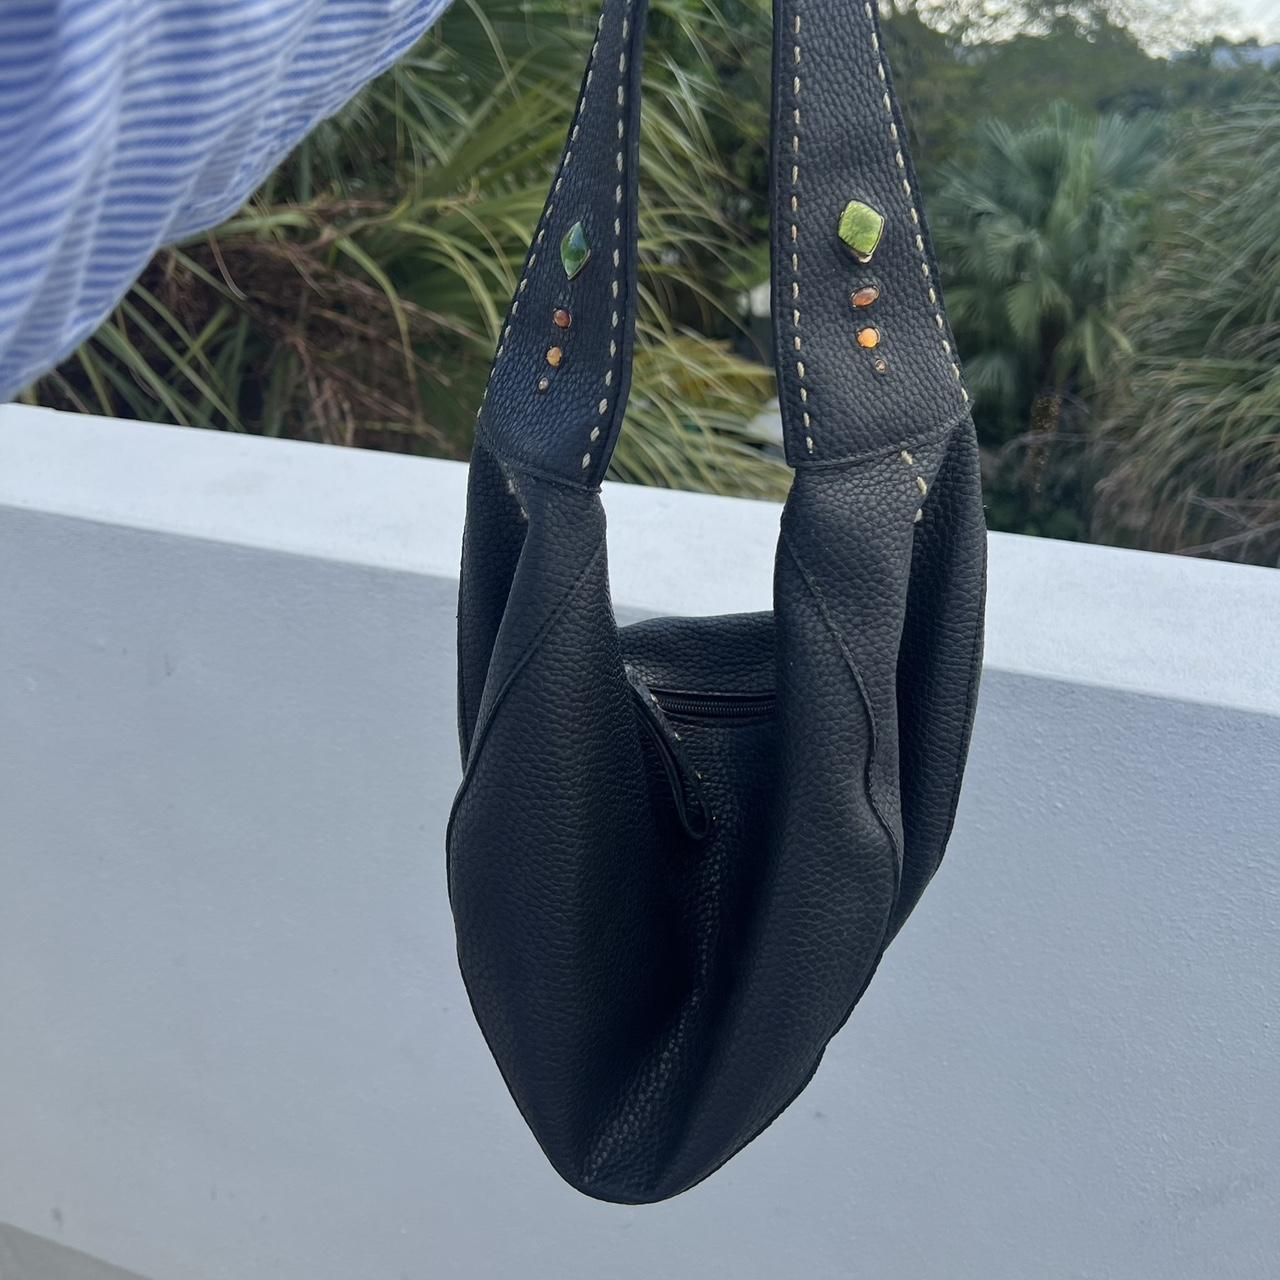 Buy AKSUTI Fashionable for Women cute Hobo Tote handbag mini clutch with  zipper (Black) at Amazon.in